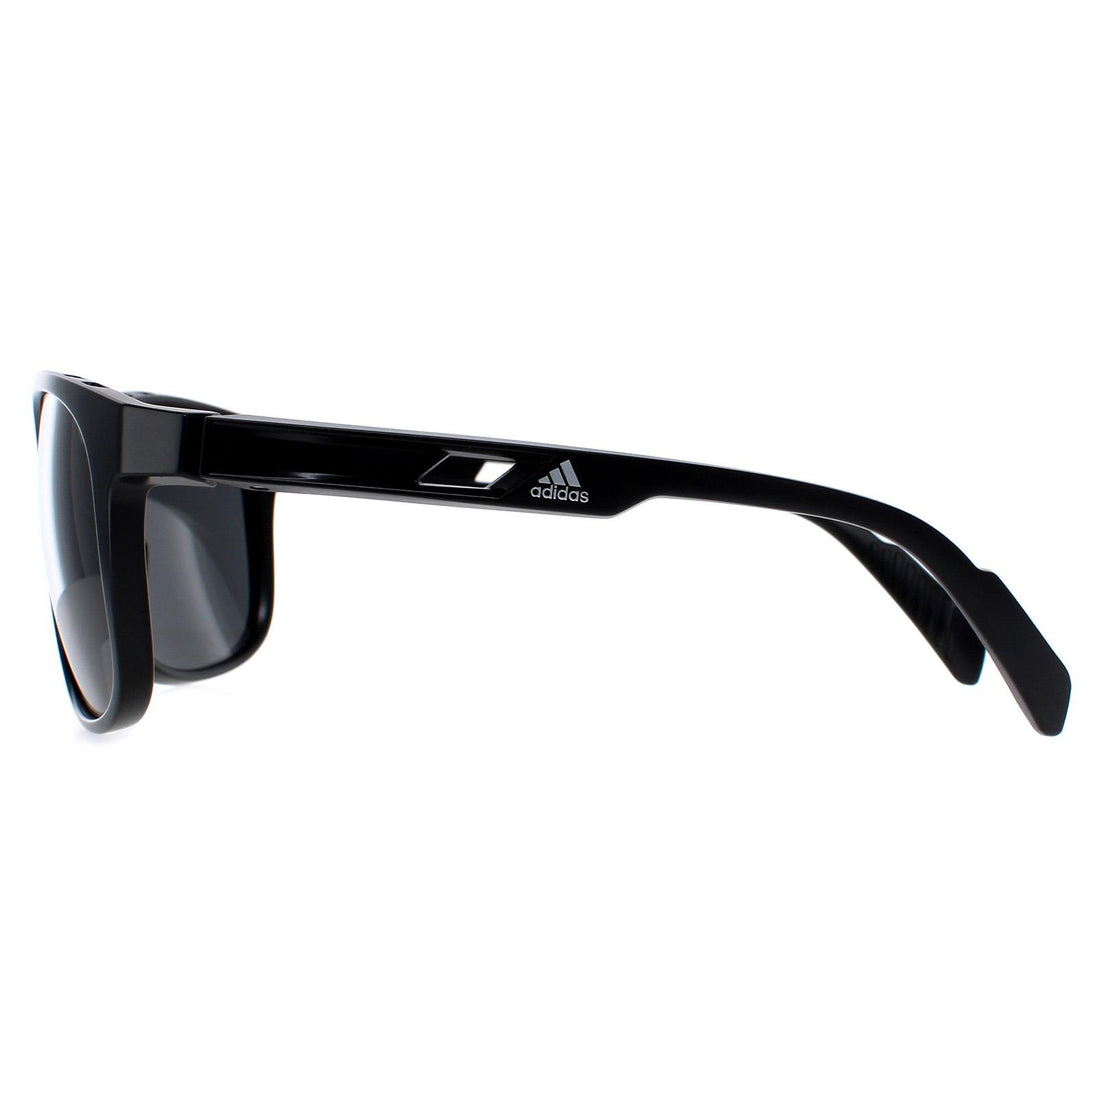 Adidas SP0011 Sunglasses